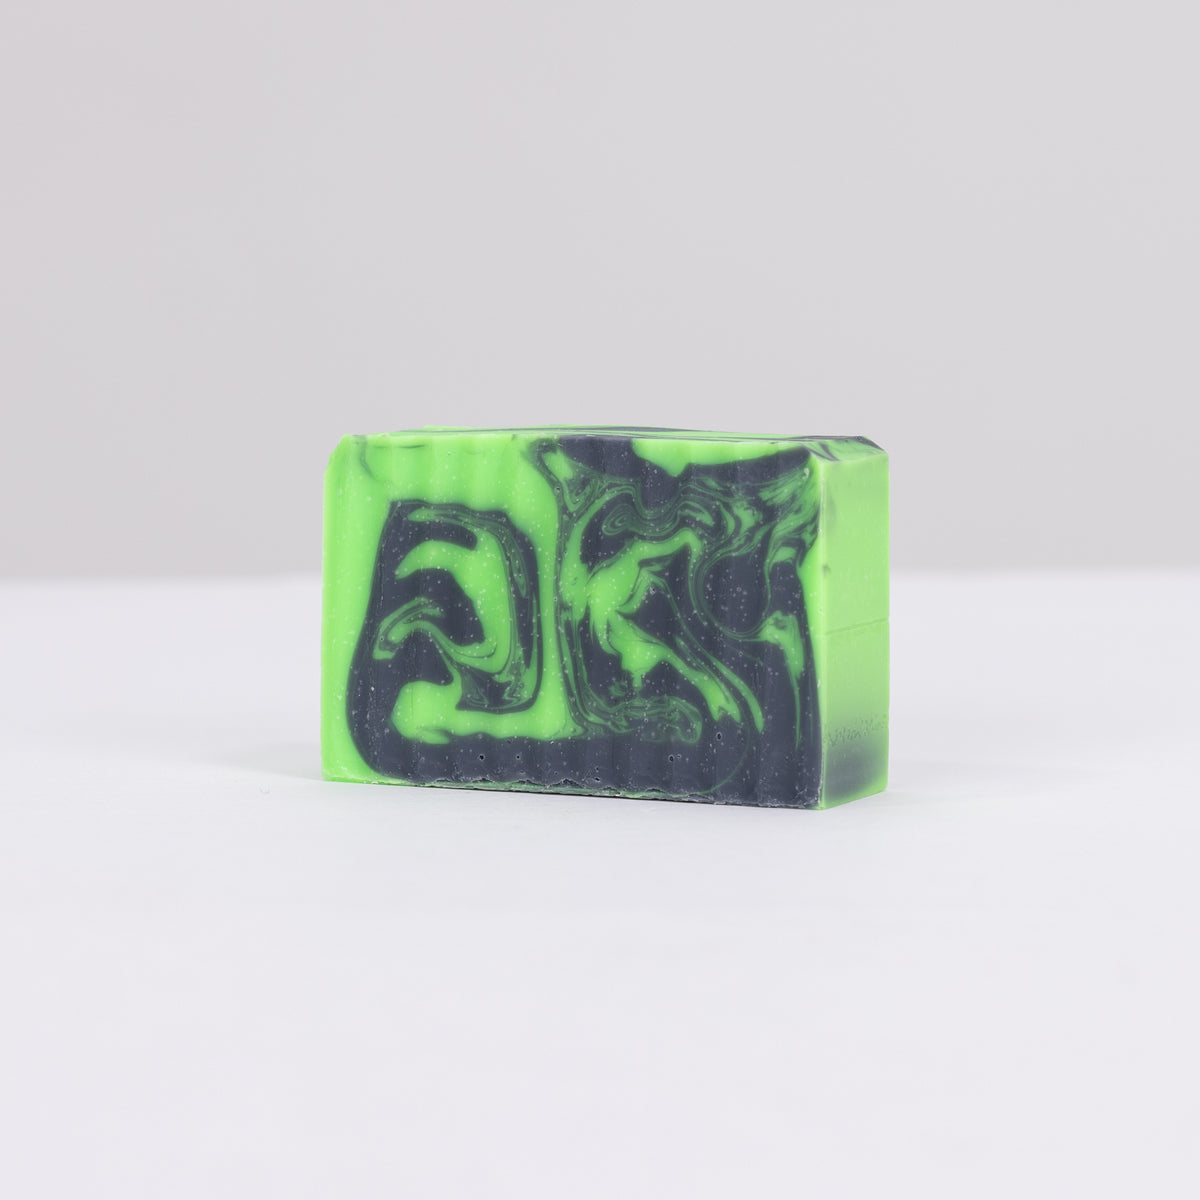 Zombie Repellent Soap